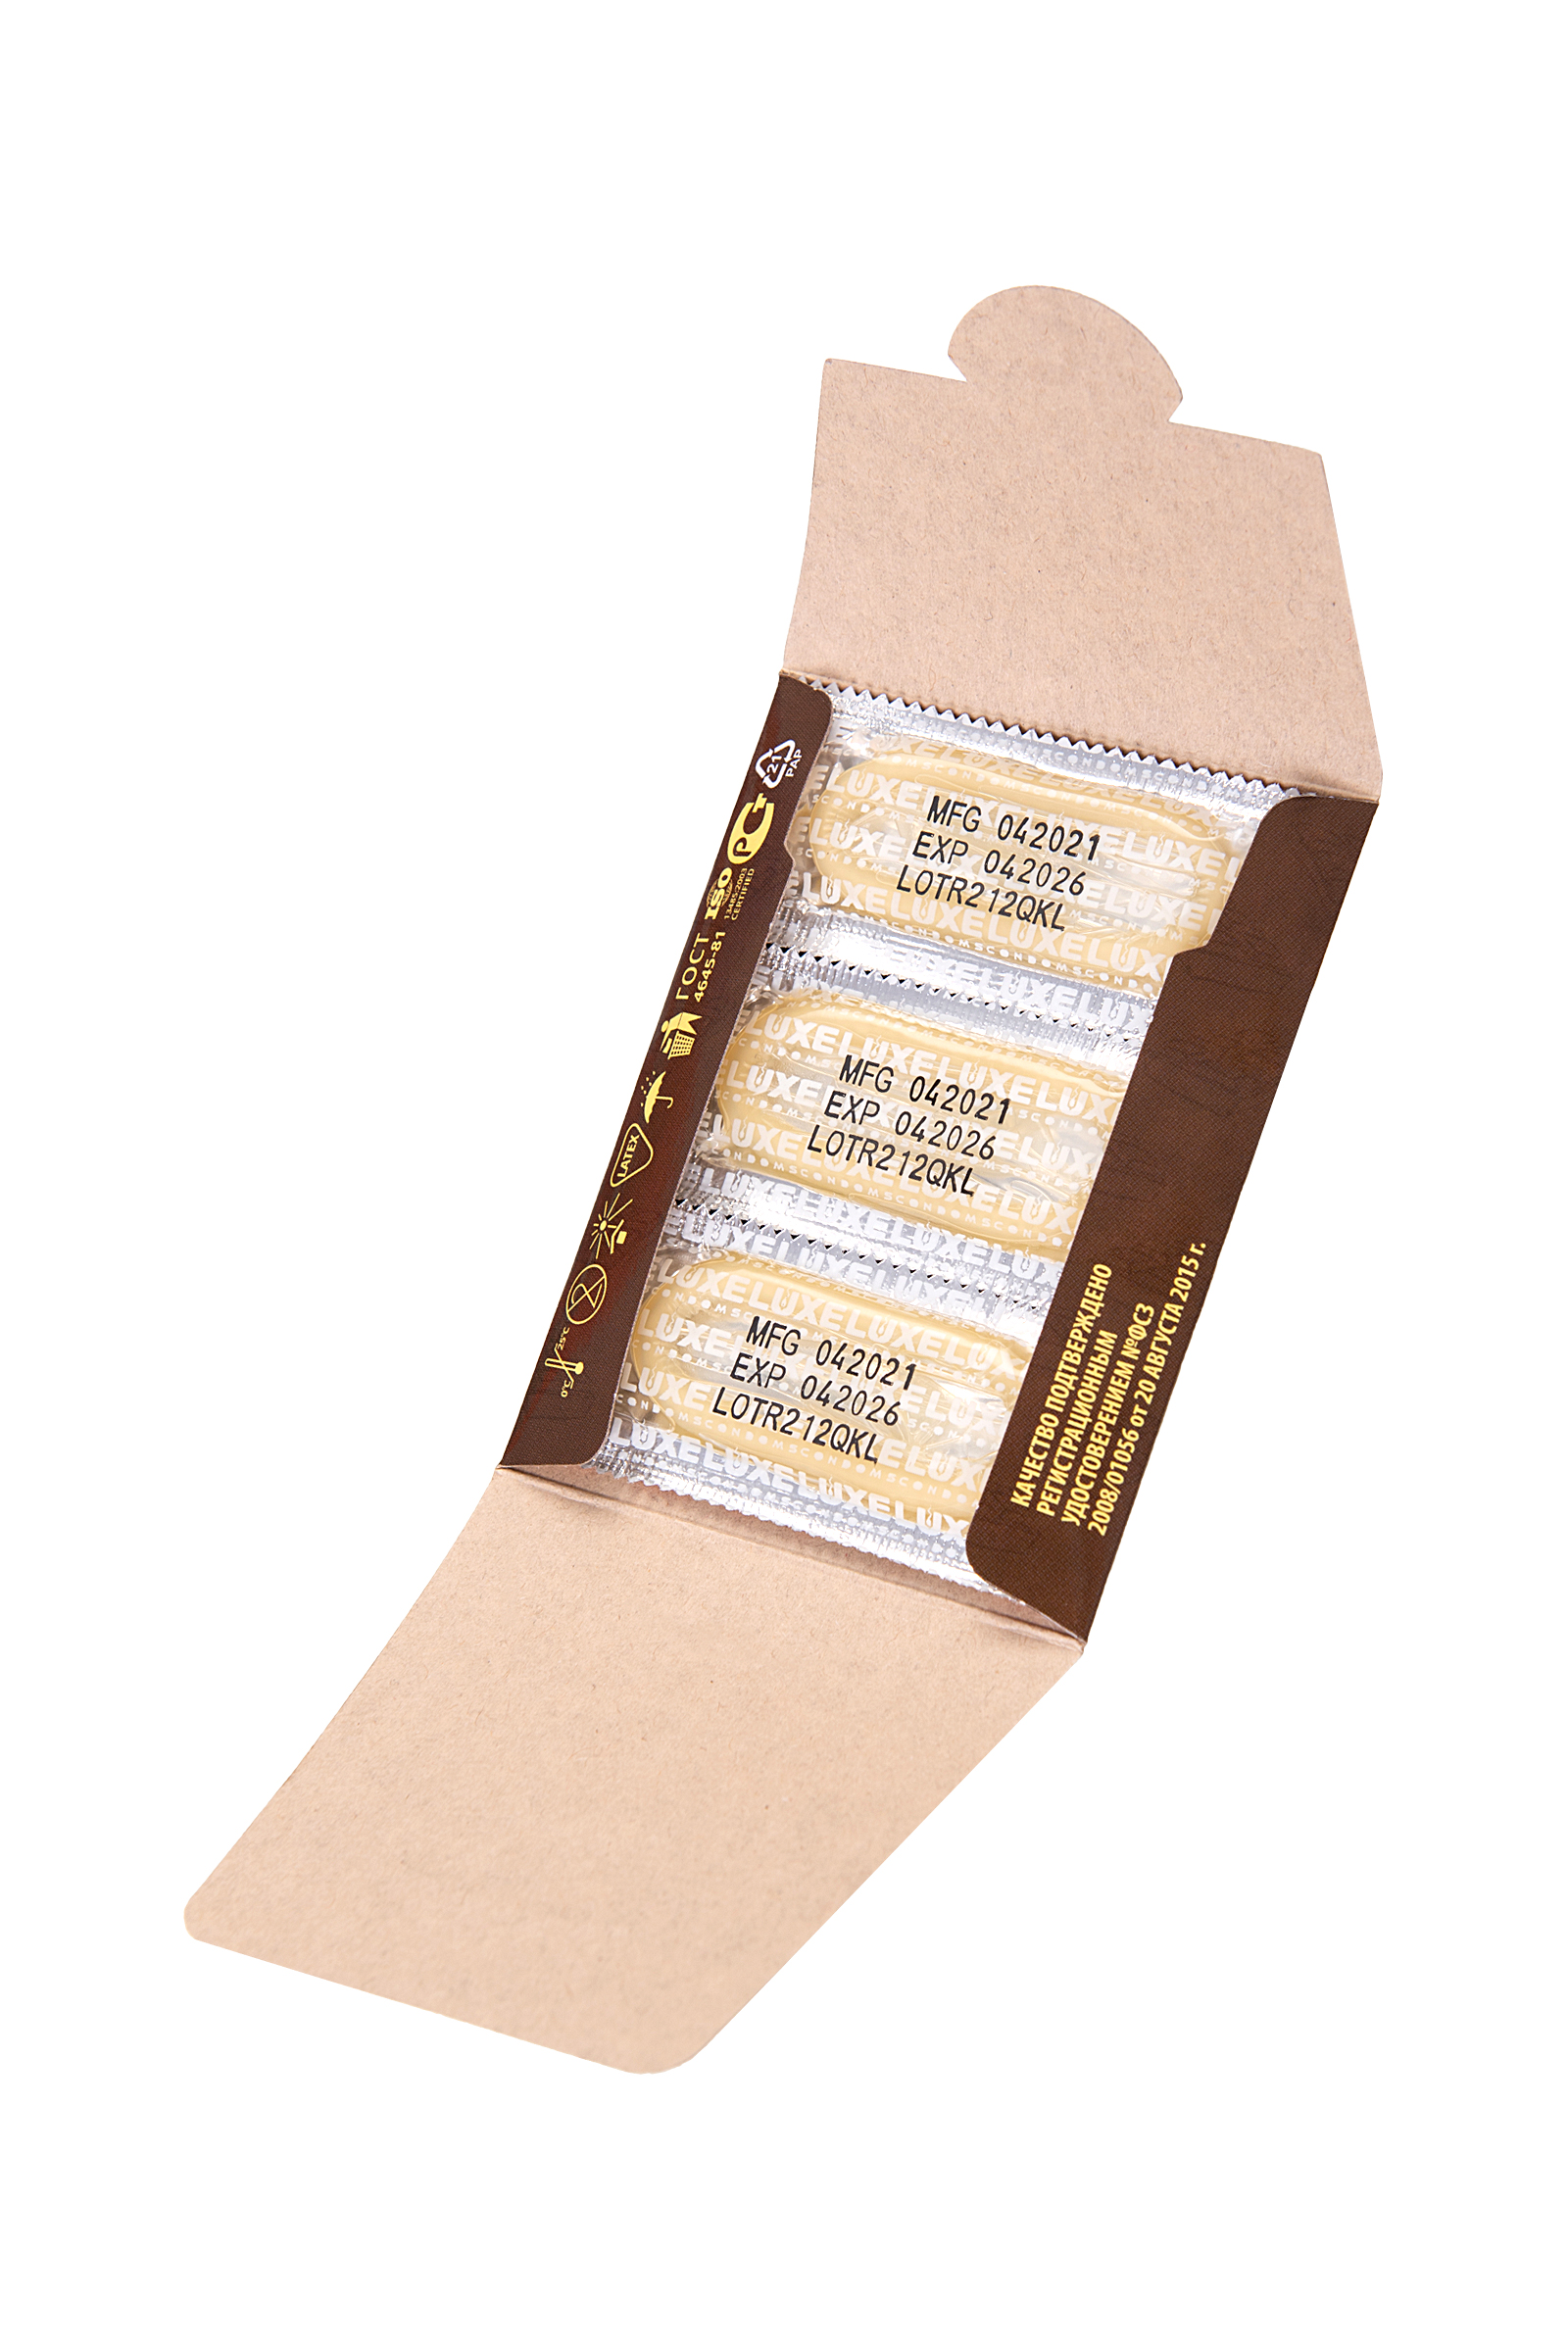 Презервативы Luxe, конверт «Шоколадный рай», латекс, шоколад, 18 см, 5,2 см, 3 шт. фото 1. Фото N4